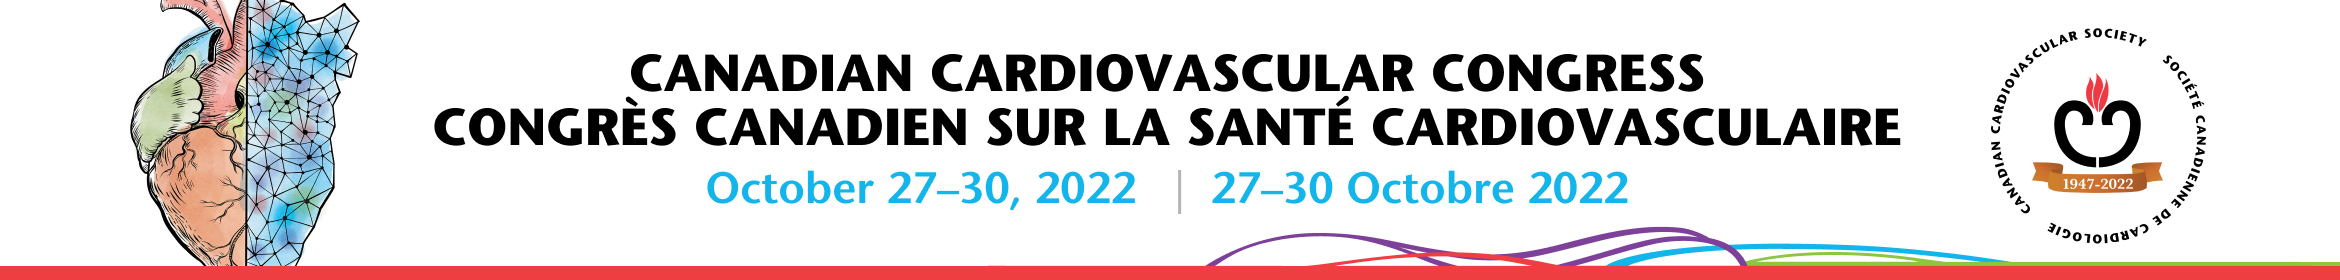 2022 Canadian Cardiovascular Congress Main banner